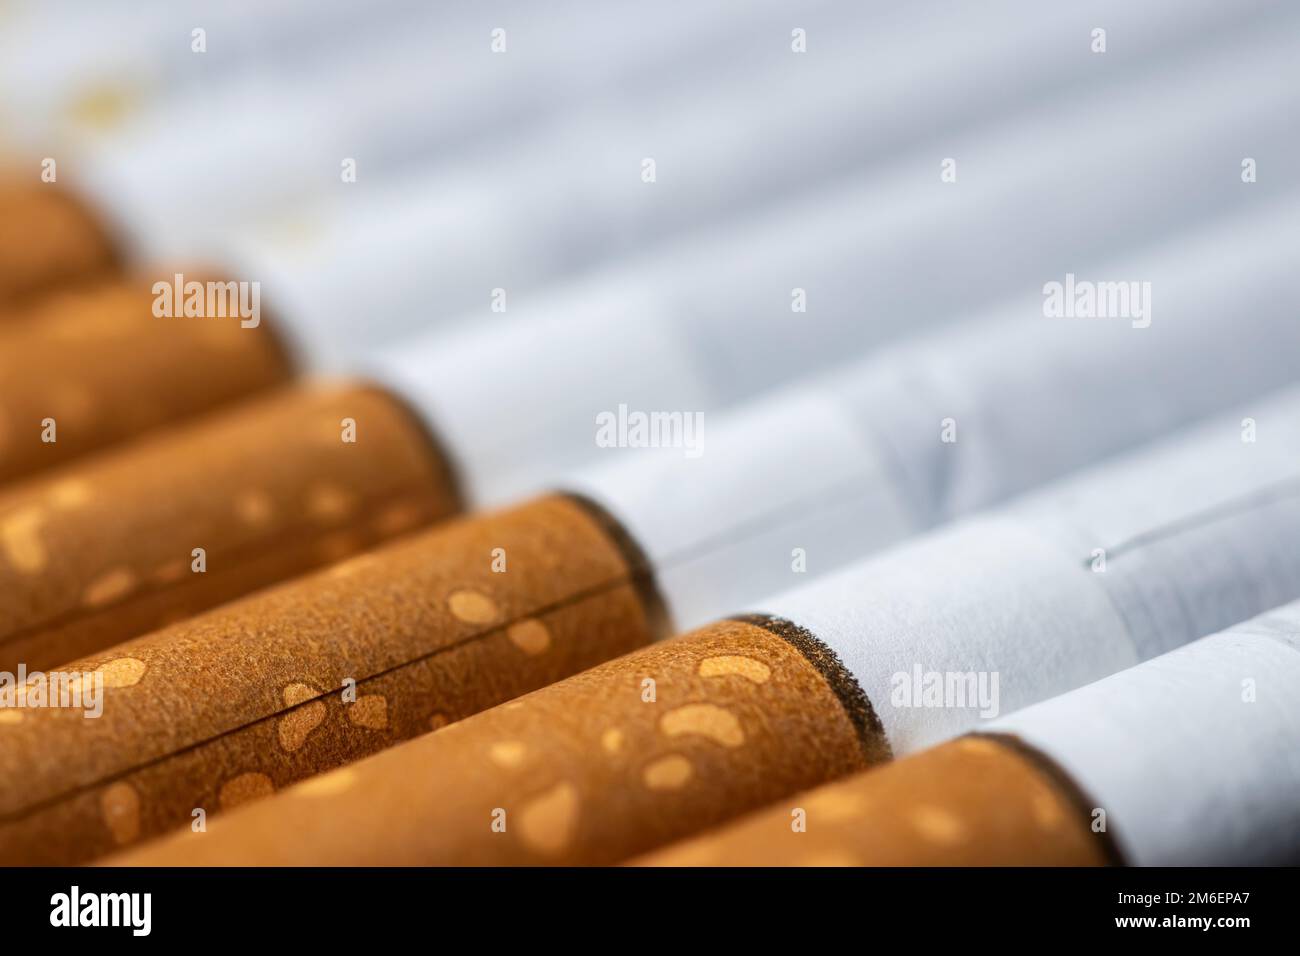 JPS Make Your Own Cigarette Tube Filters